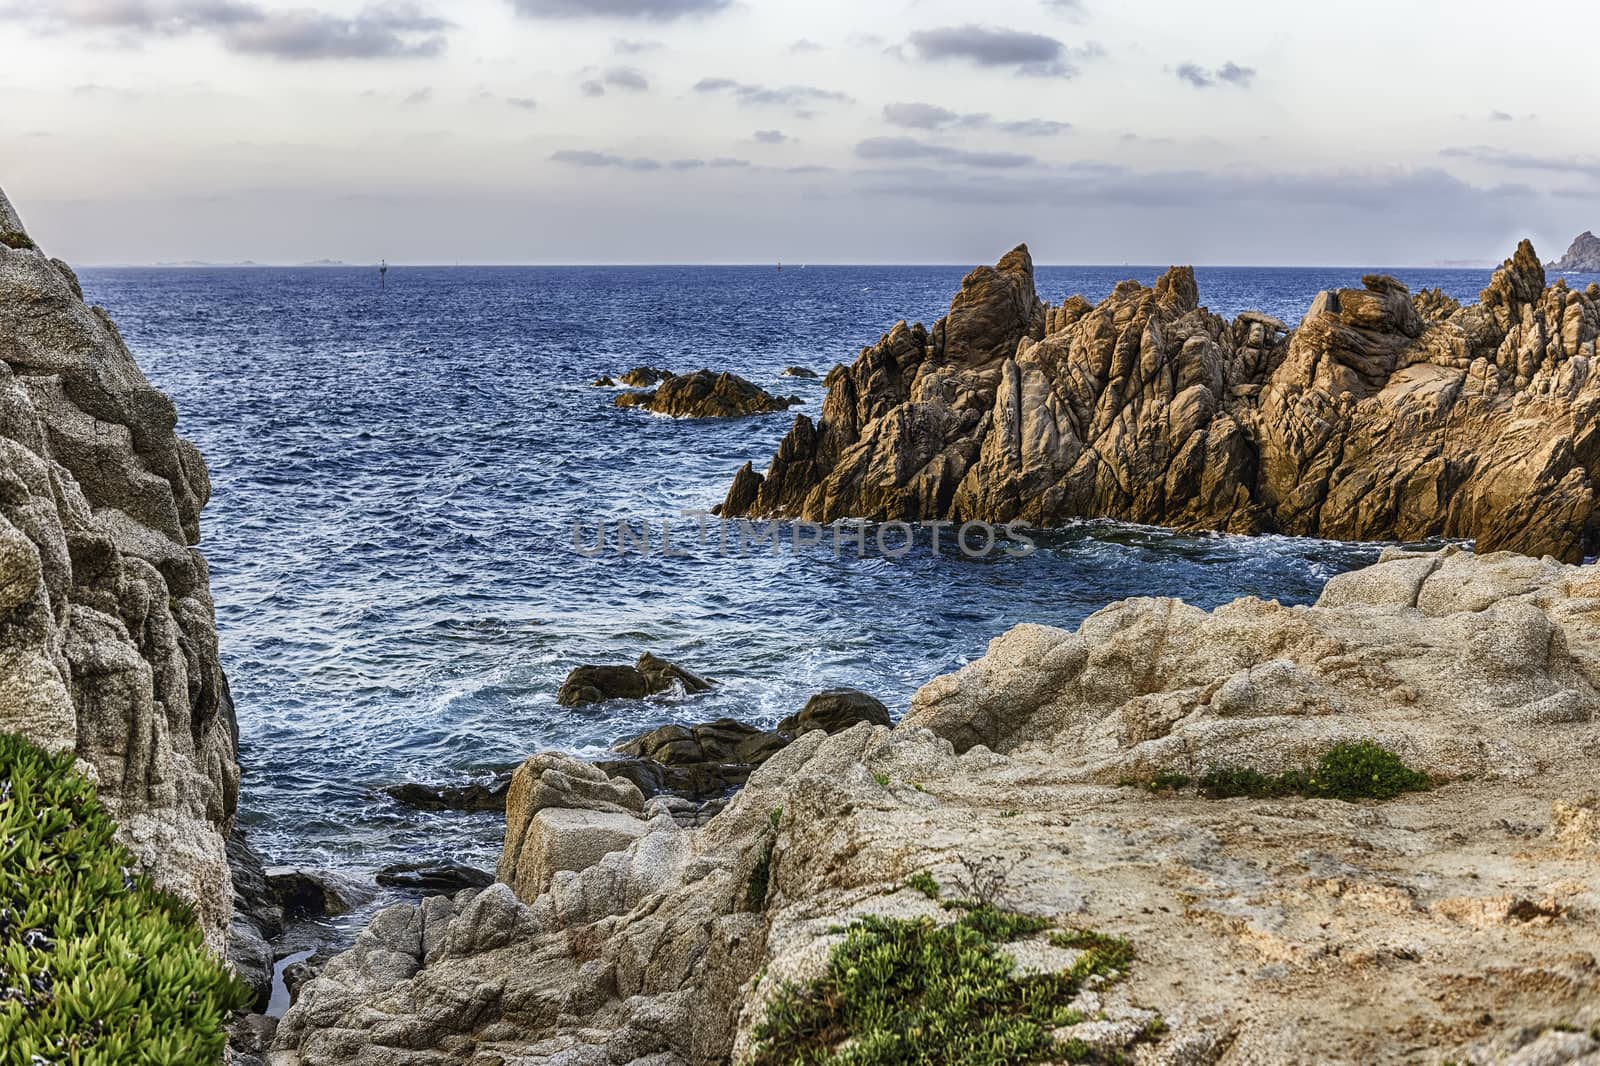 Scenic rocky beach in Santa Teresa Gallura, Sardinia, Italy by marcorubino